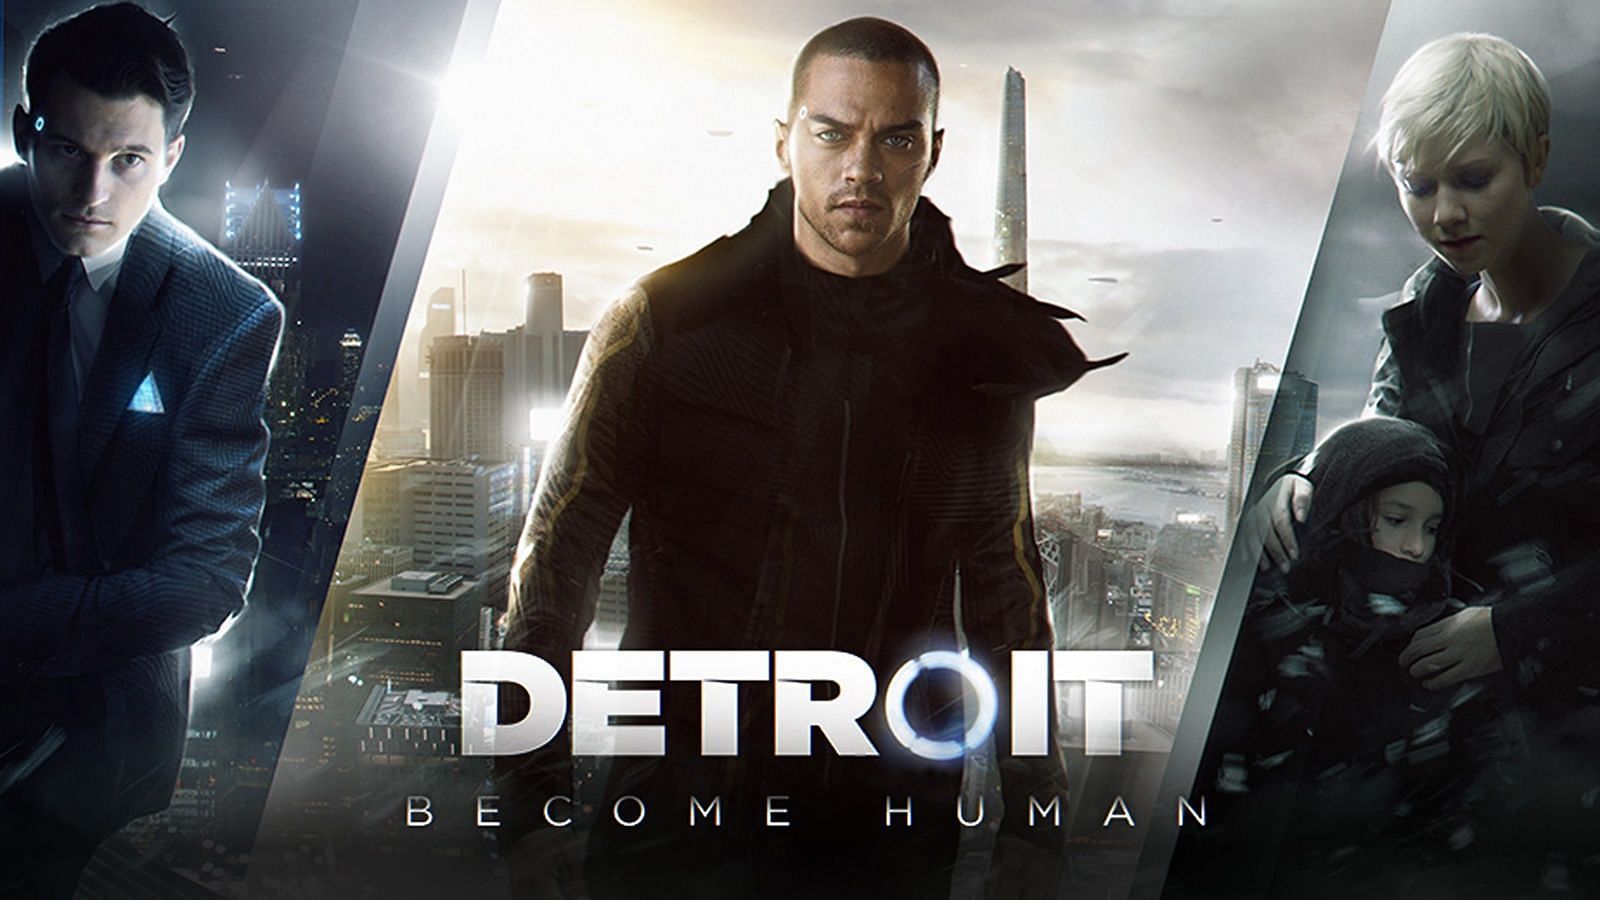 Detroit Become Human (image via Wallpaper Access)